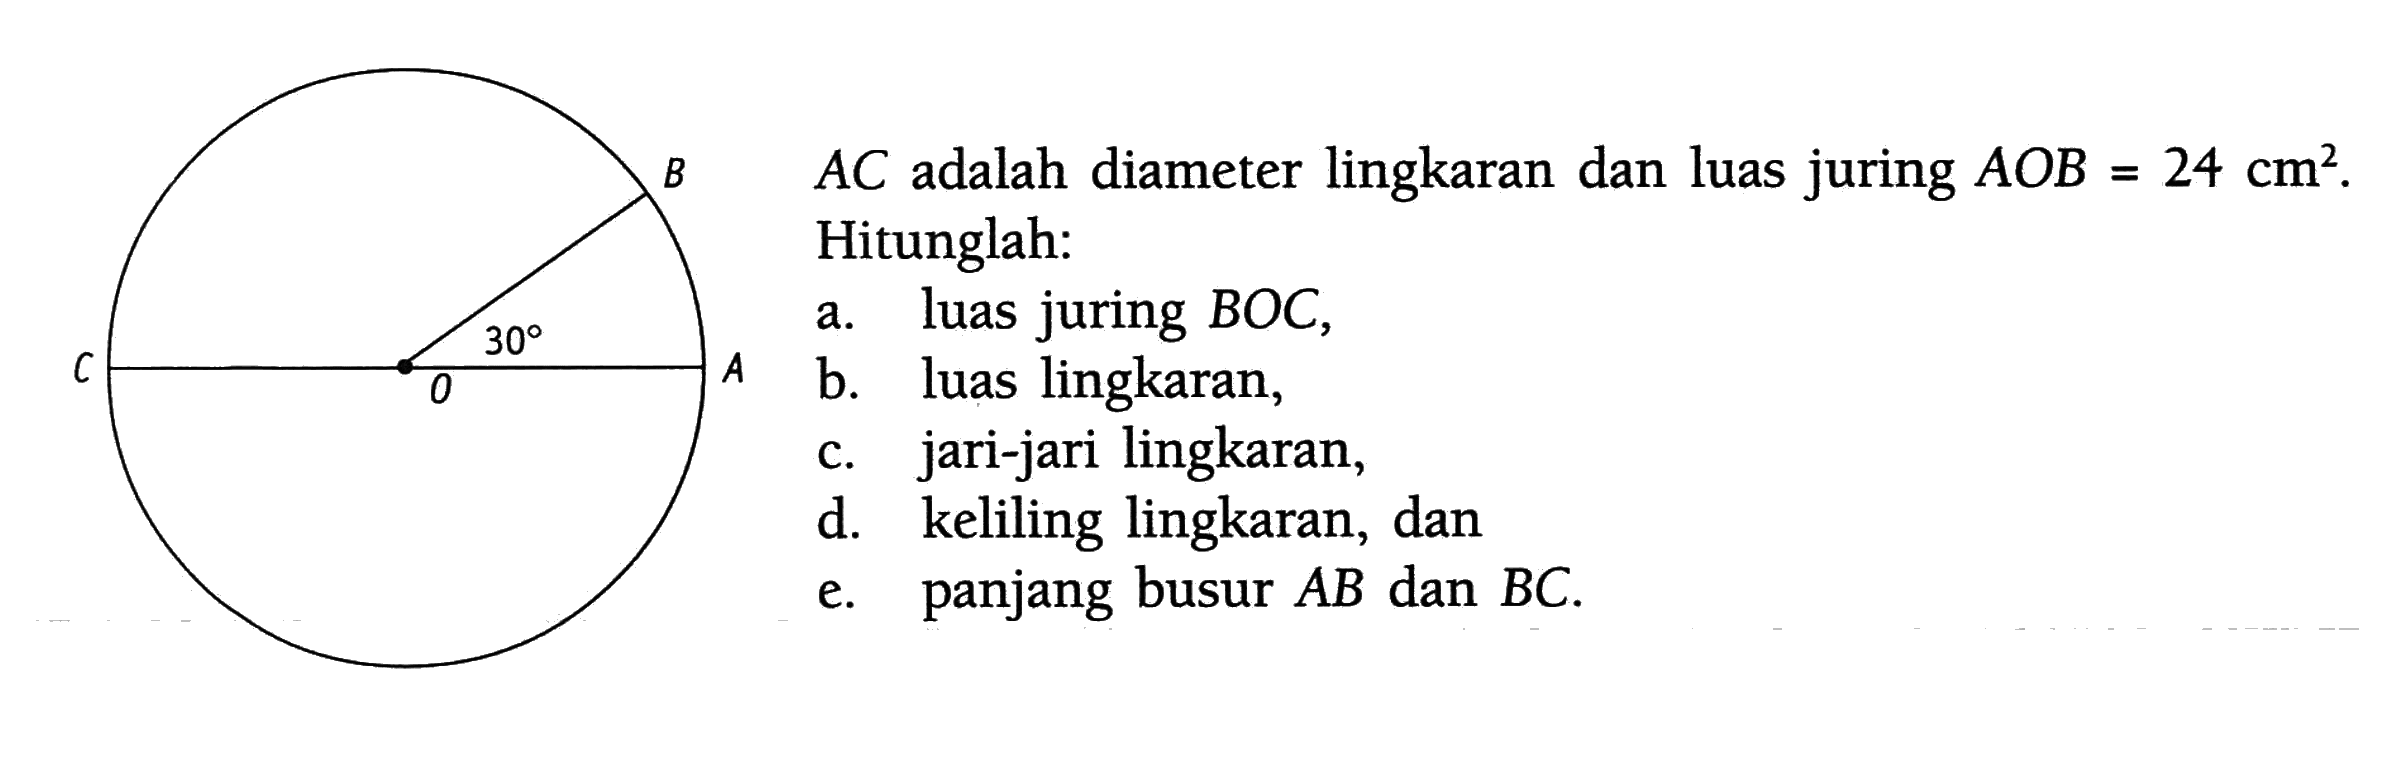 Sudut BOA=30.                                                                                          AC adalah diameter lingkaran dan luas juring AOB=24 cm^2. Hitunglah:
a. luas juring BOC,
b. luas lingkaran,
c. jari-jari lingkaran,
d. keliling lingkaran, dan
e. panjang busur AB dan BC.